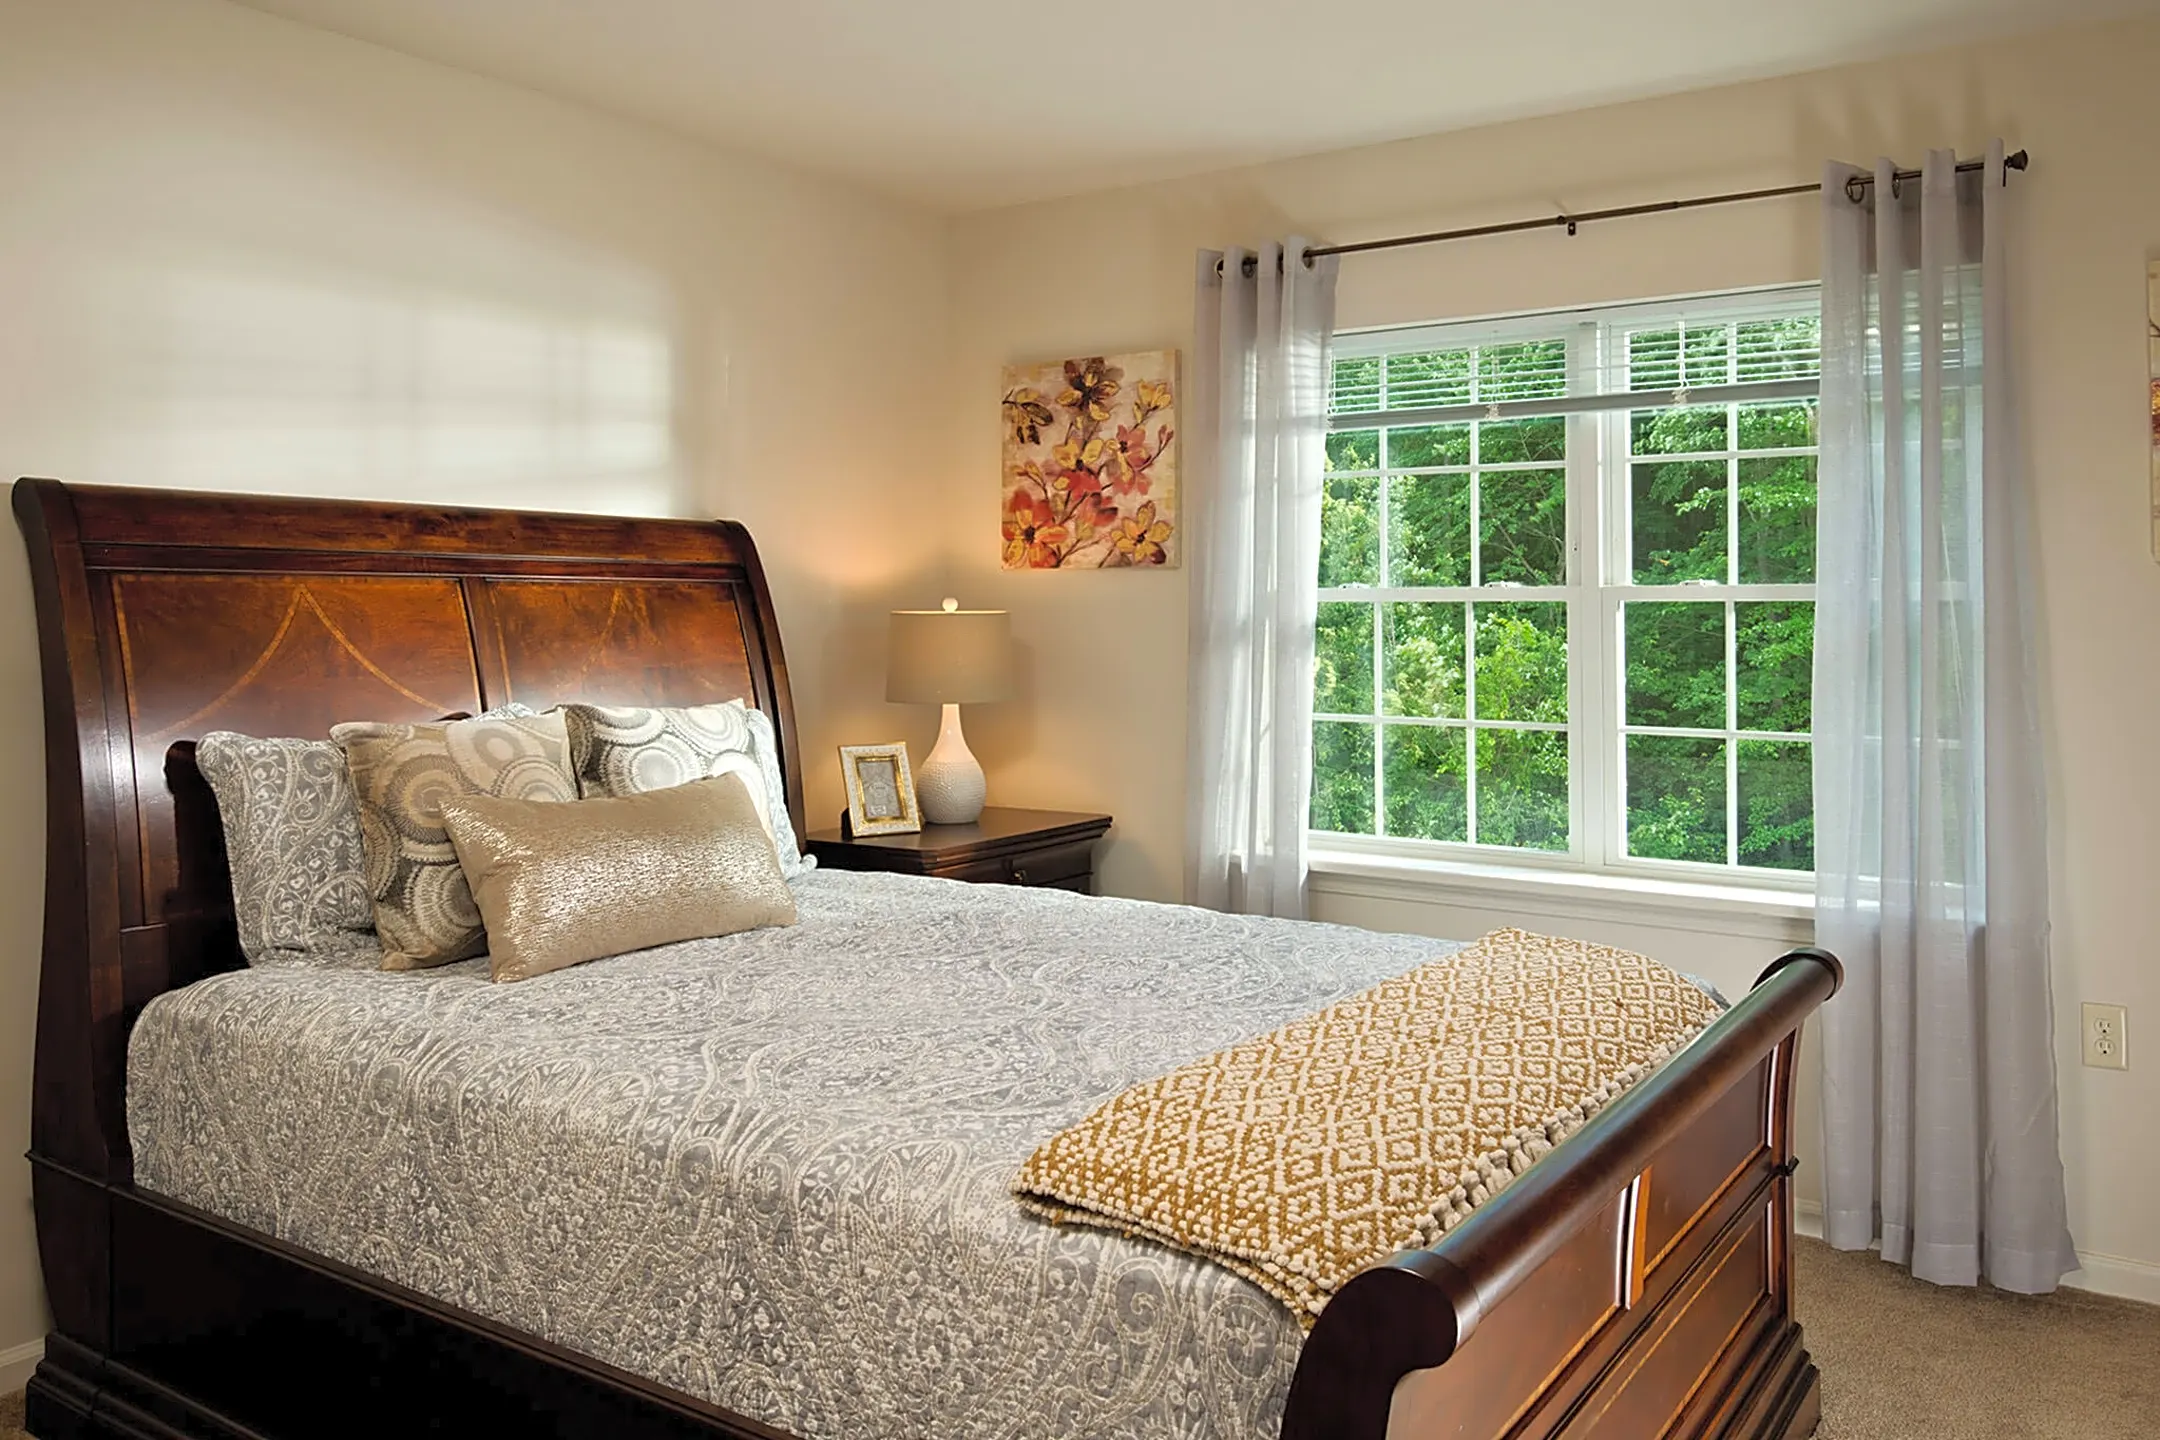 Bedroom - Glenmont Abbey Village - 55+ Living - Glenmont, NY